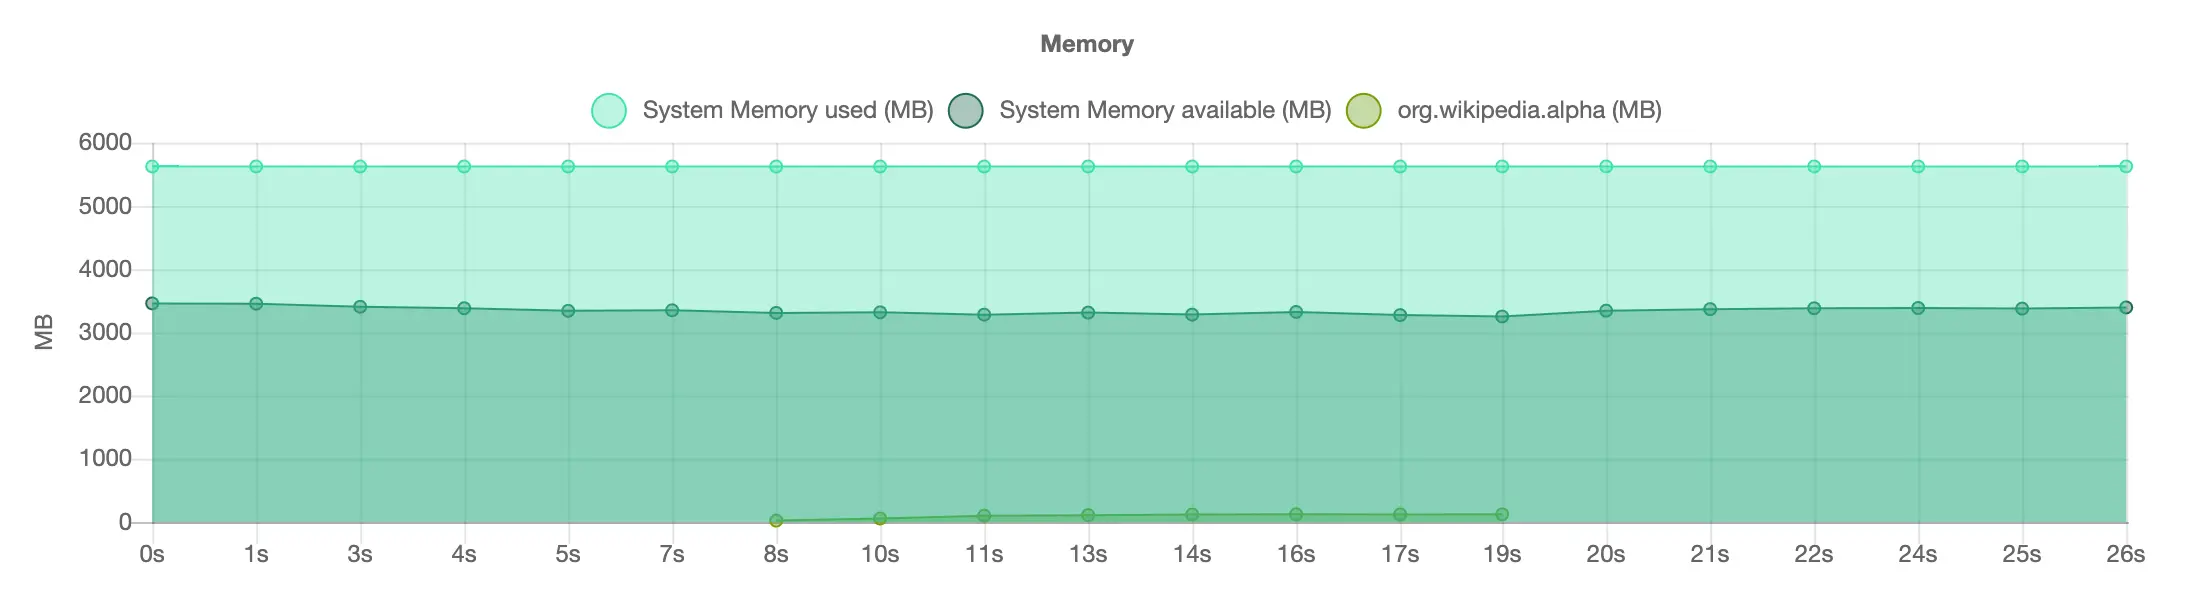 Memory consumption chart